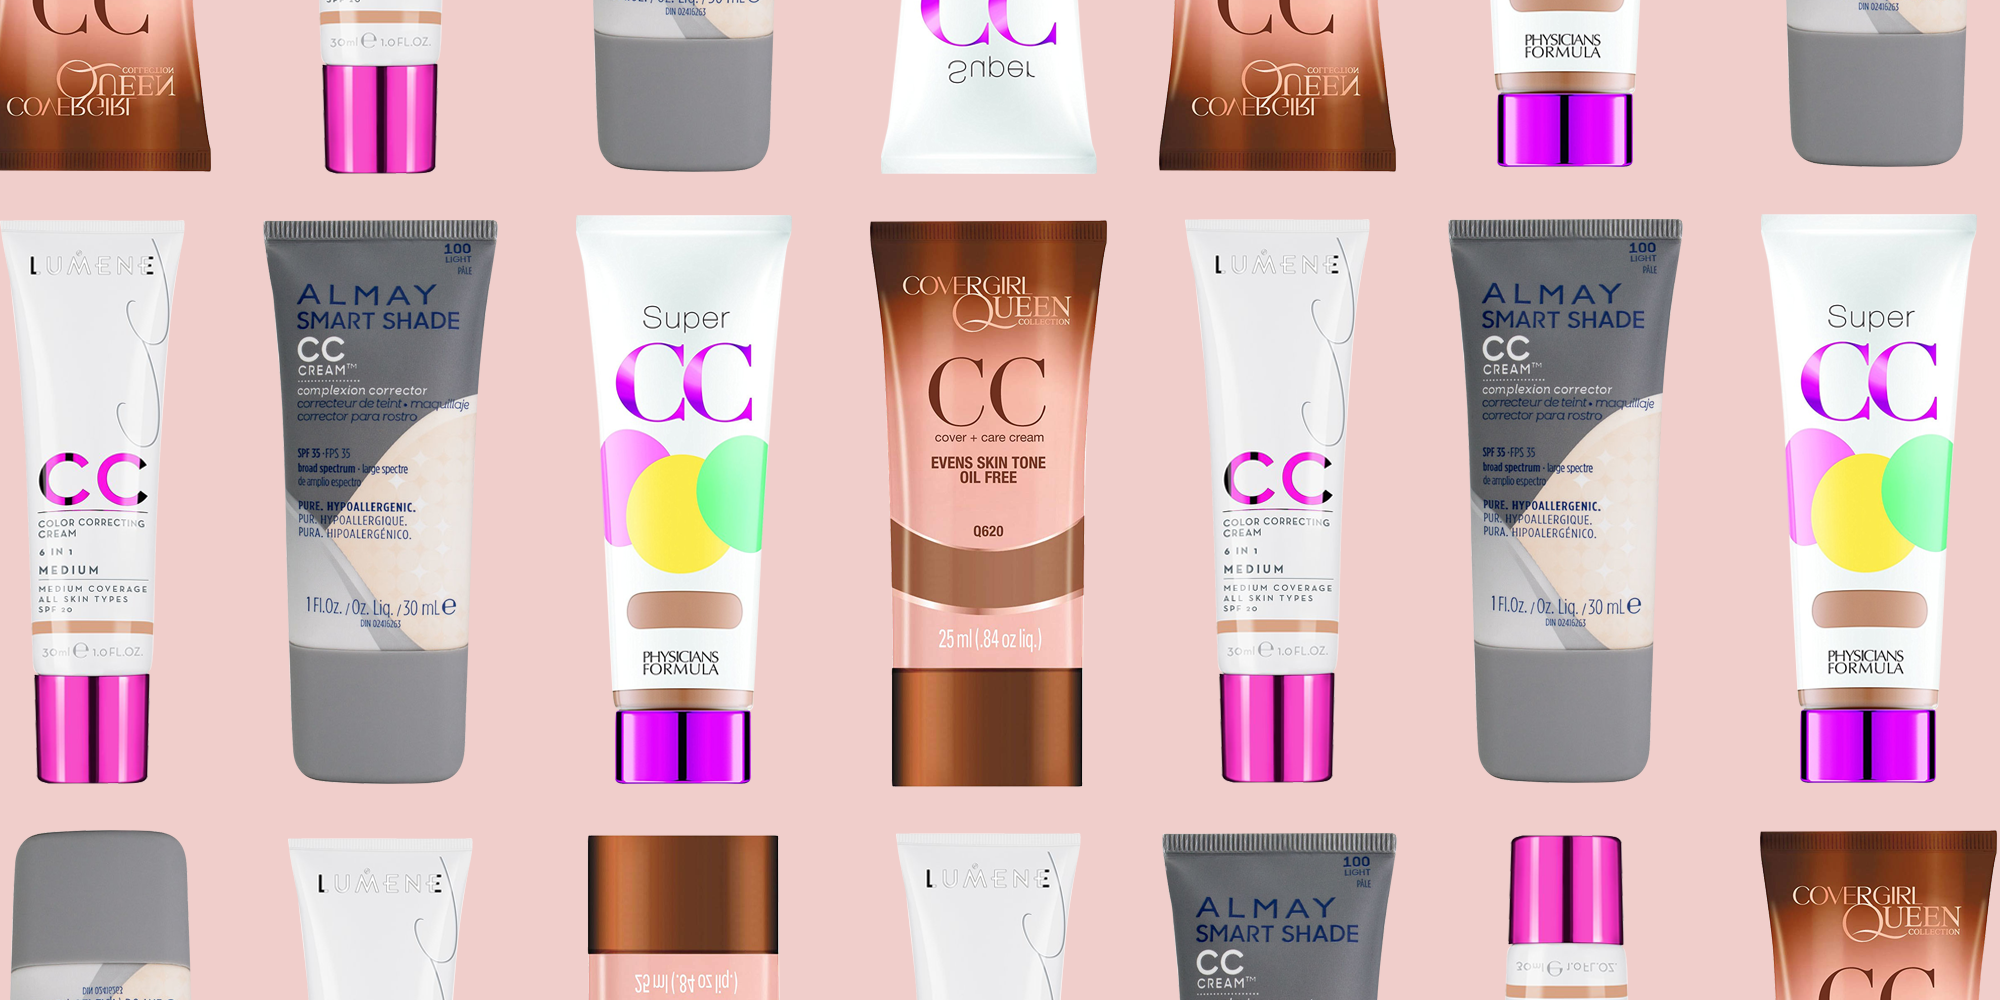 8 Best Drugstore CC Creams - Budget-Friendly Color Correcting Cream